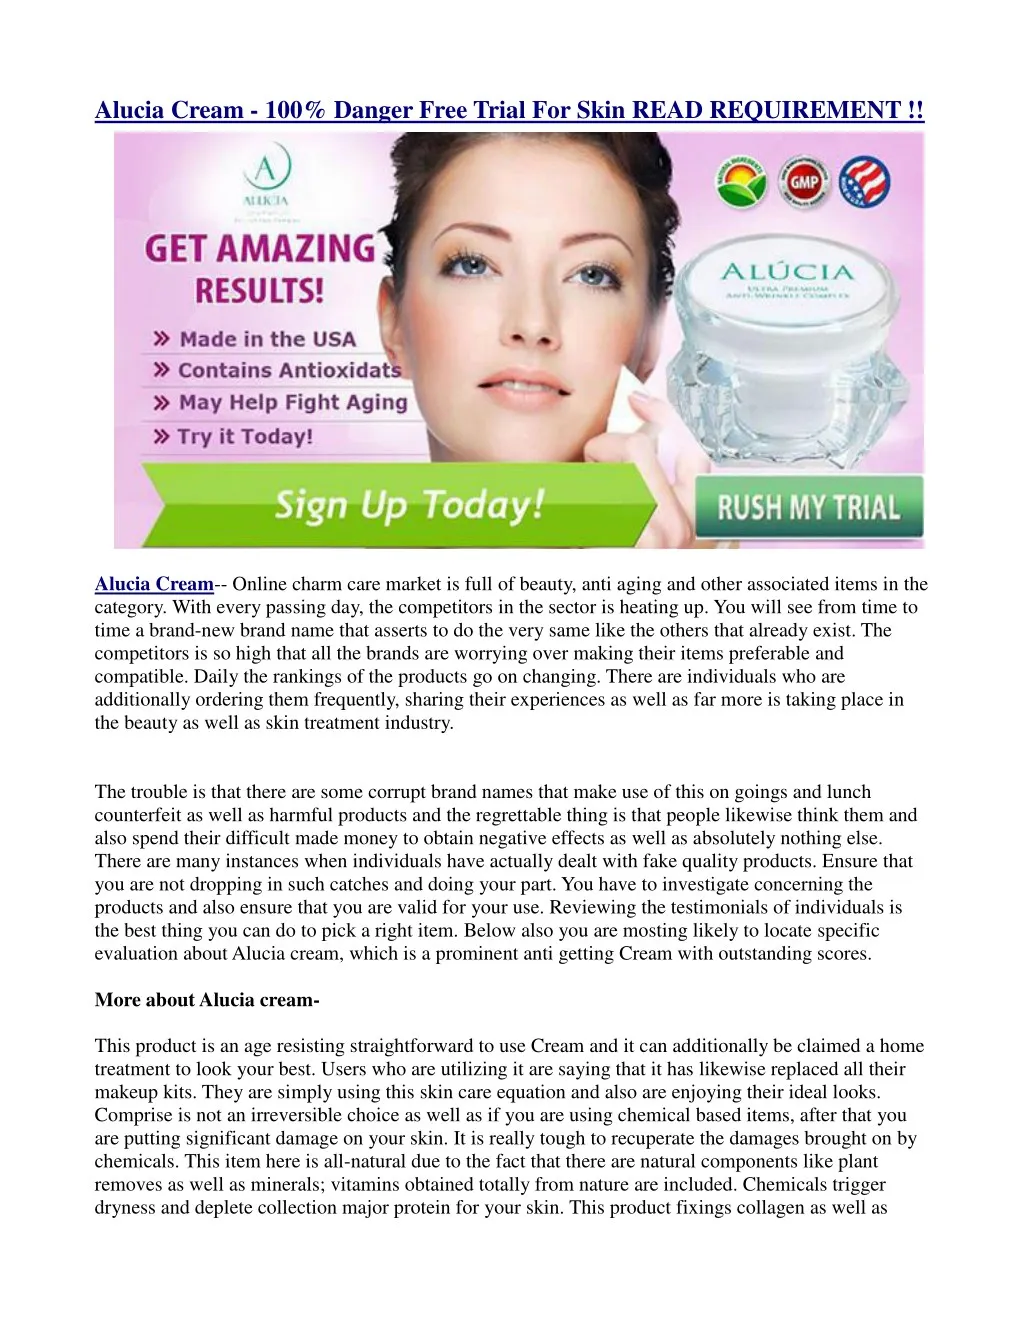 alucia cream 100 danger free trial for skin read